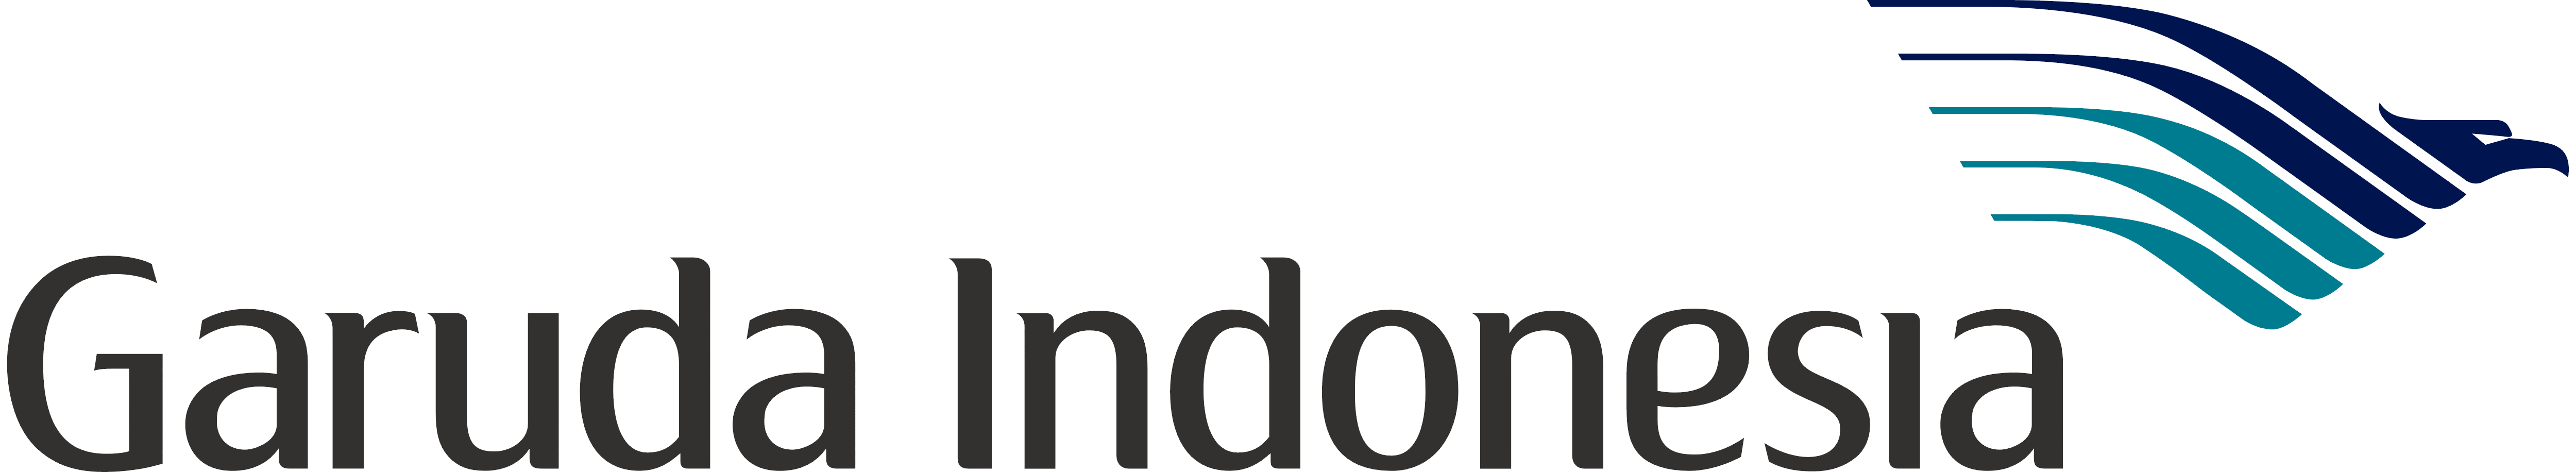  Garuda  Indonesia Logos  Download